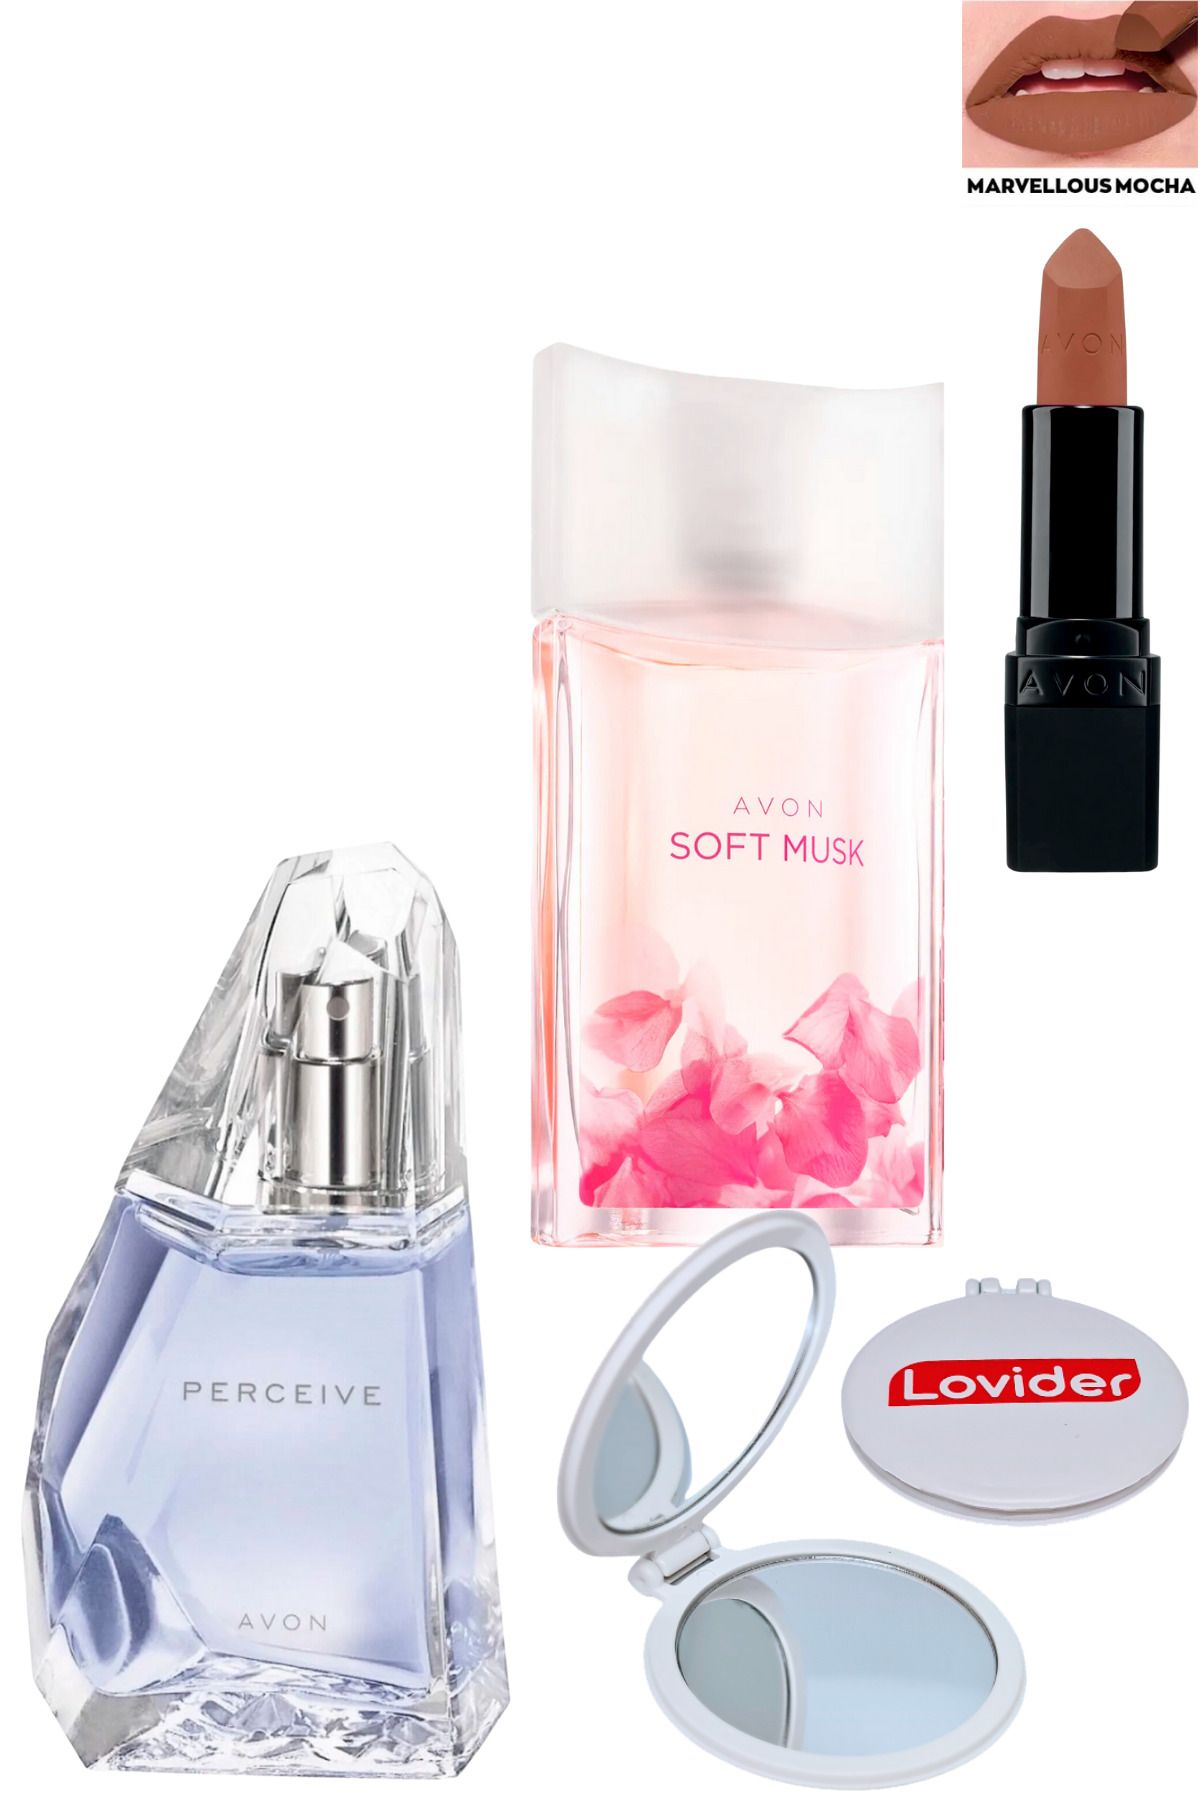 Avon Perceive 50ml + Soft Musk 50ml Kadın Parfüm + Marvellous Mocha Ruj + Lovider Cep Aynası